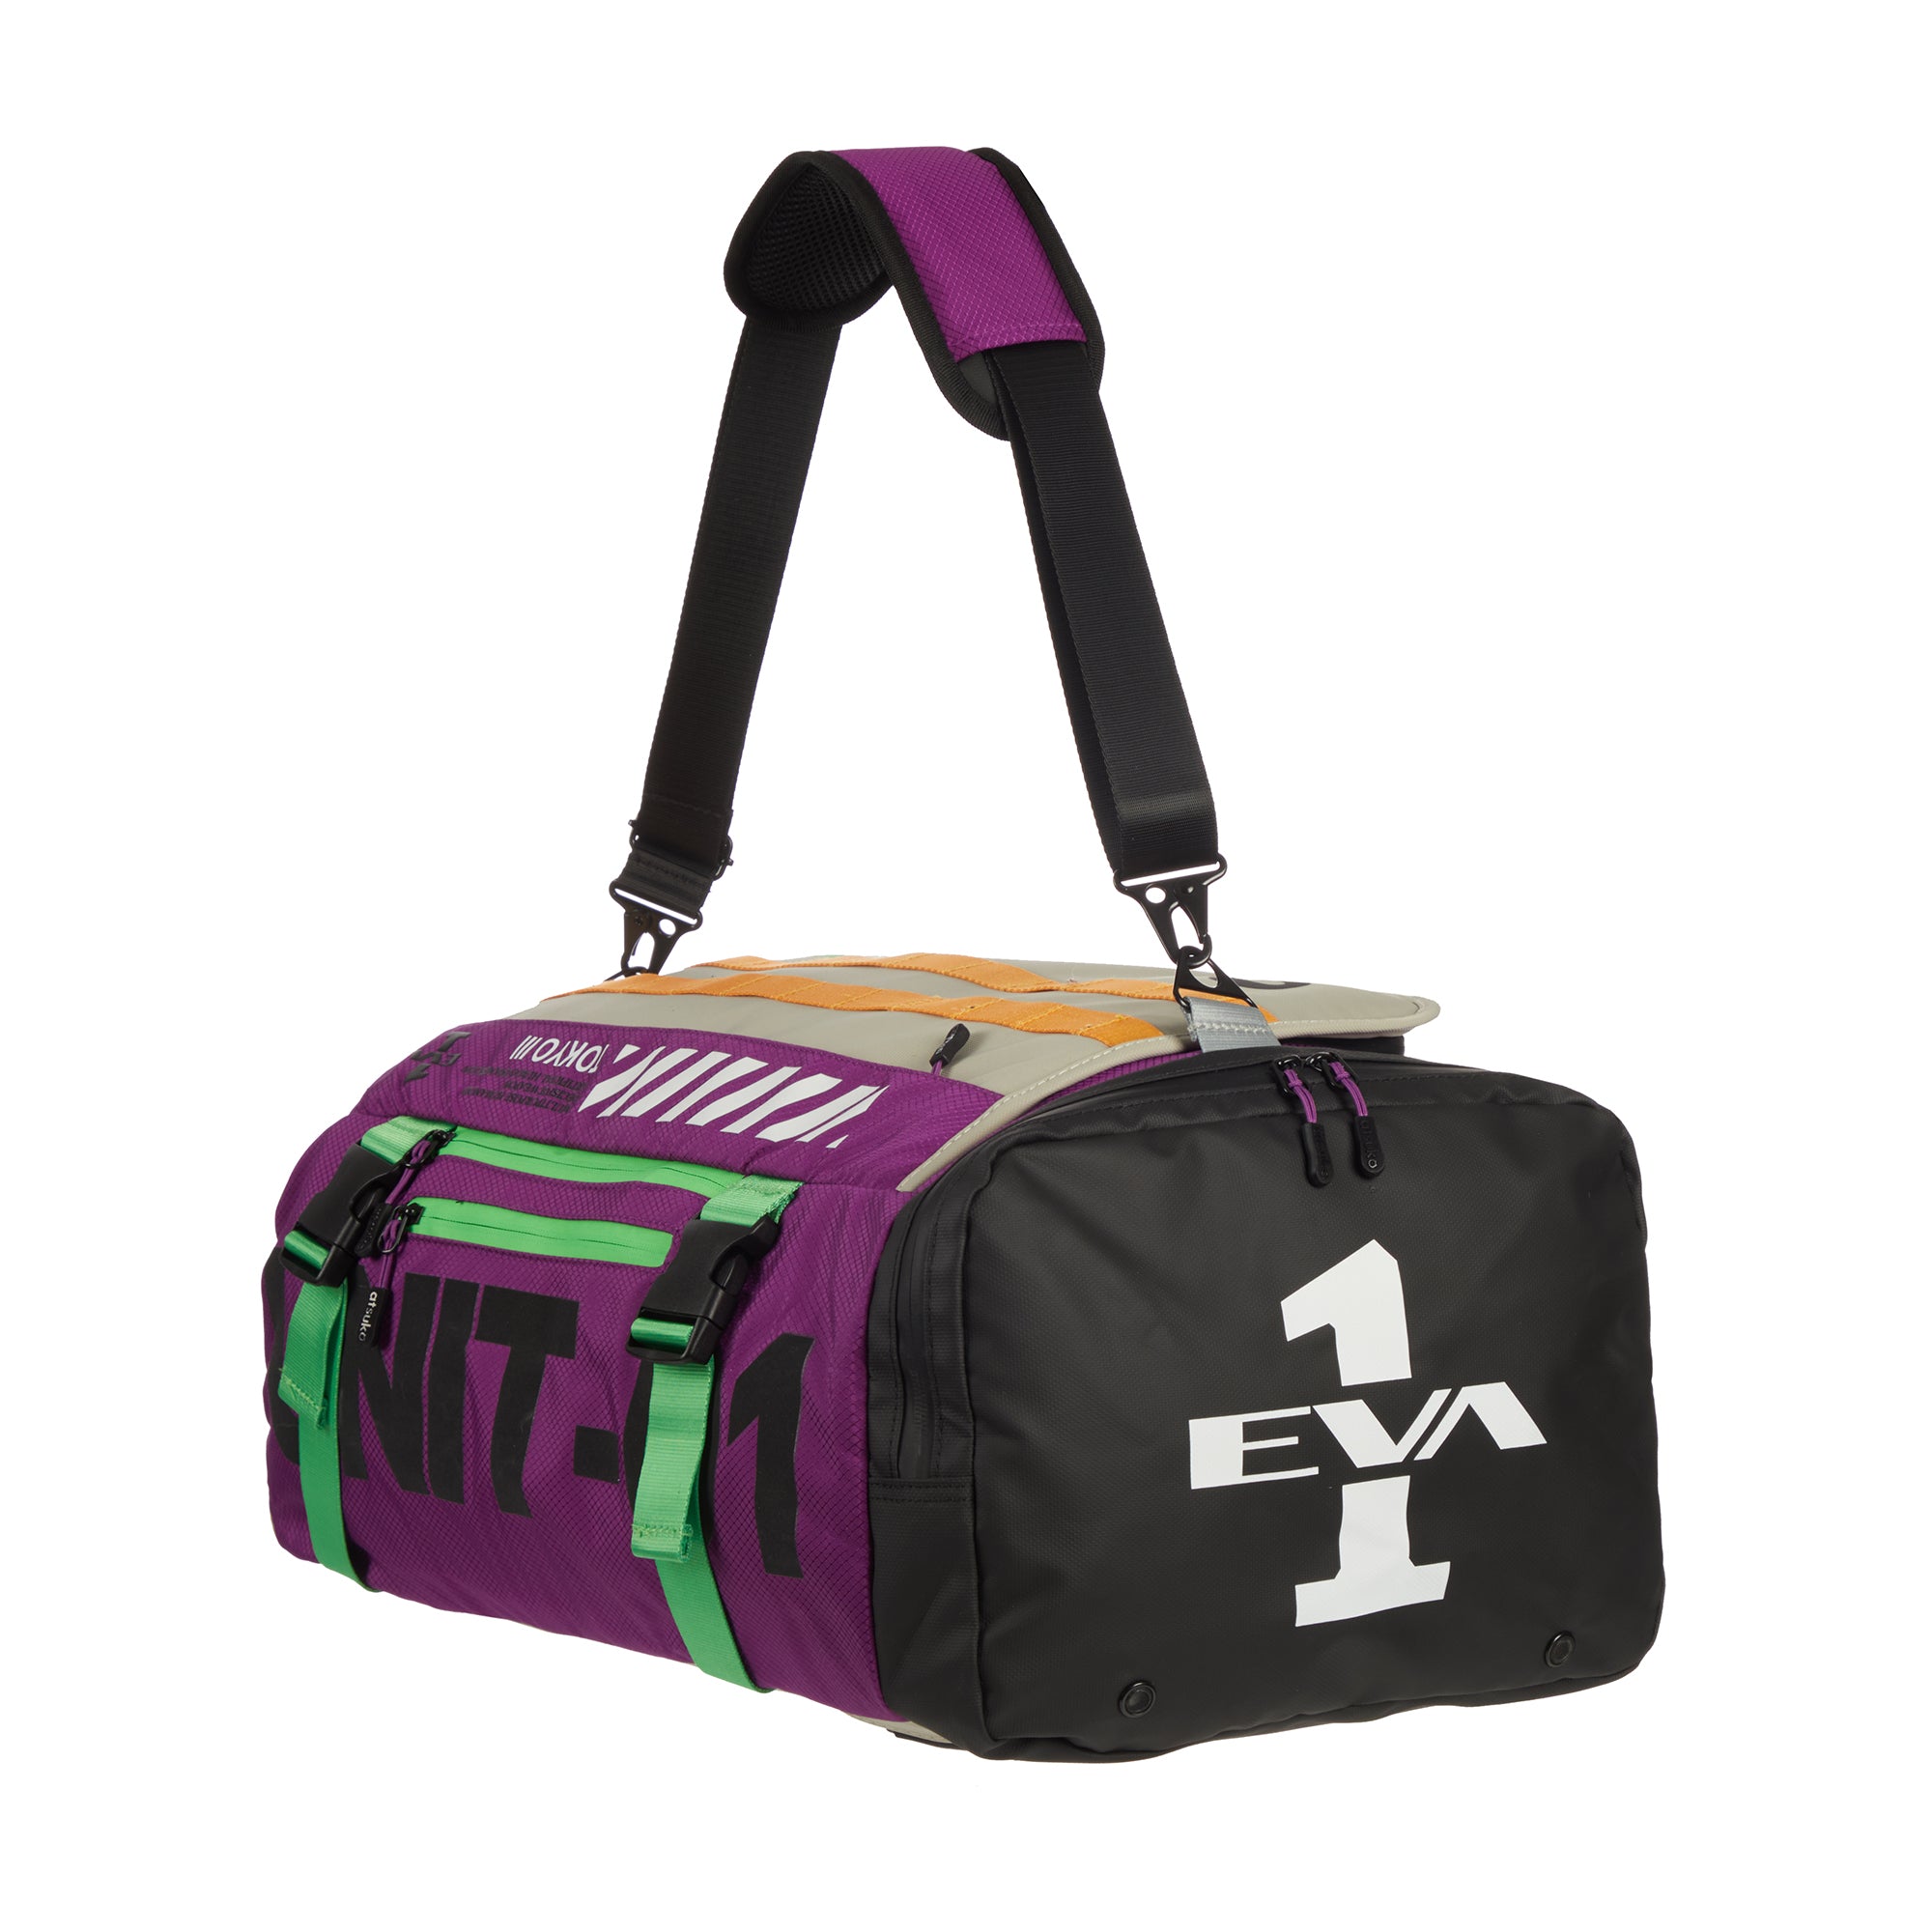 Eva 1 Convertible Duffle Bag